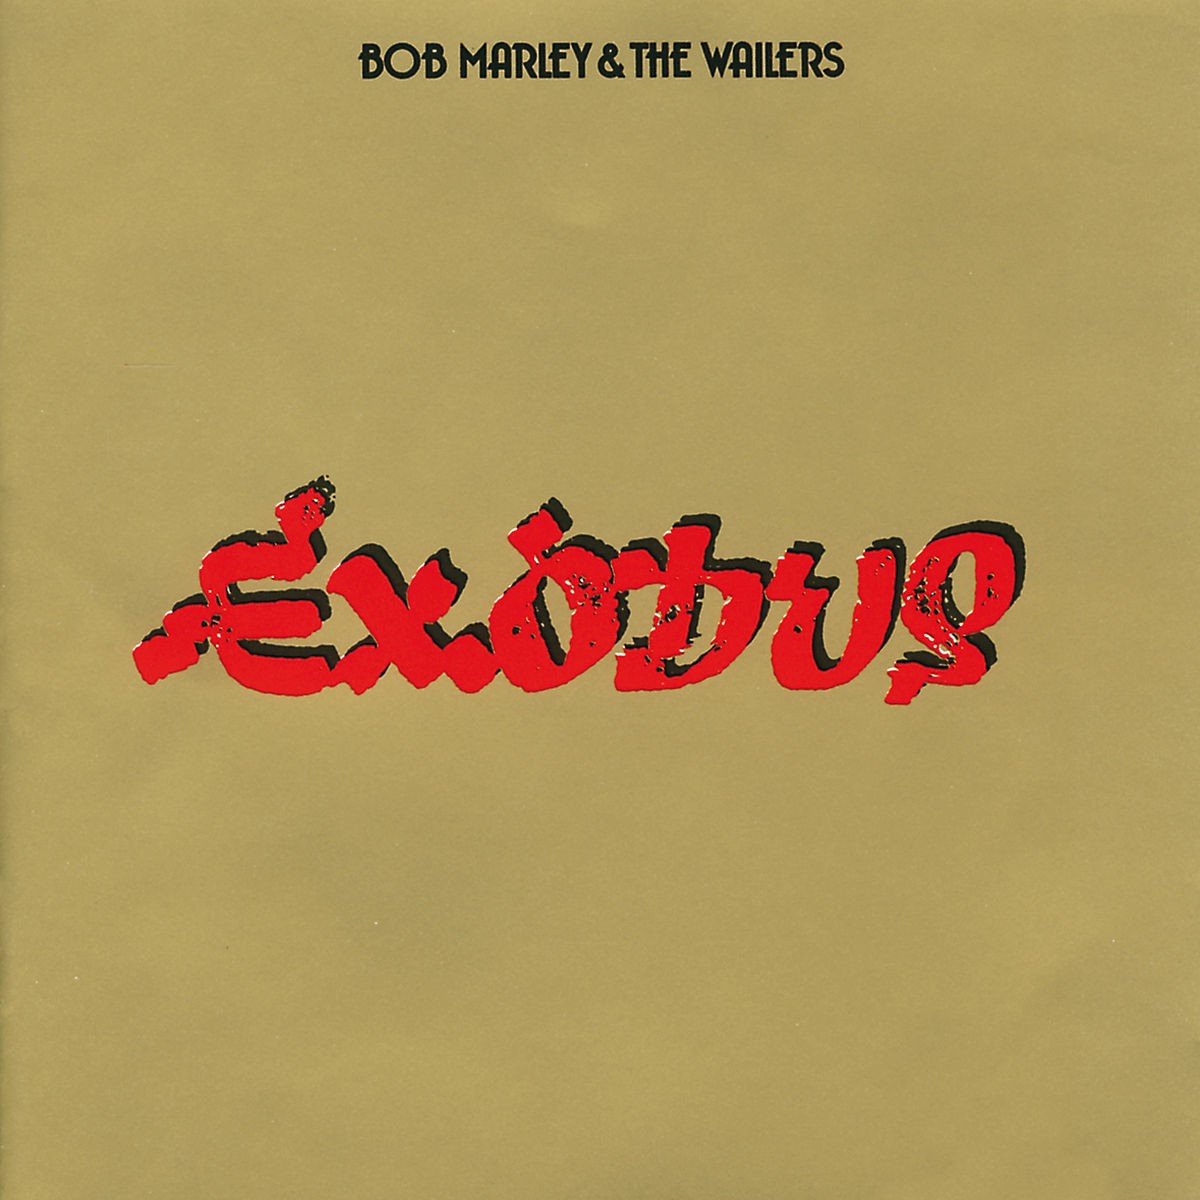 Bob Marley & The Wailers - Exodus (CD) (Remastered) - Bob Marley & The Wailers